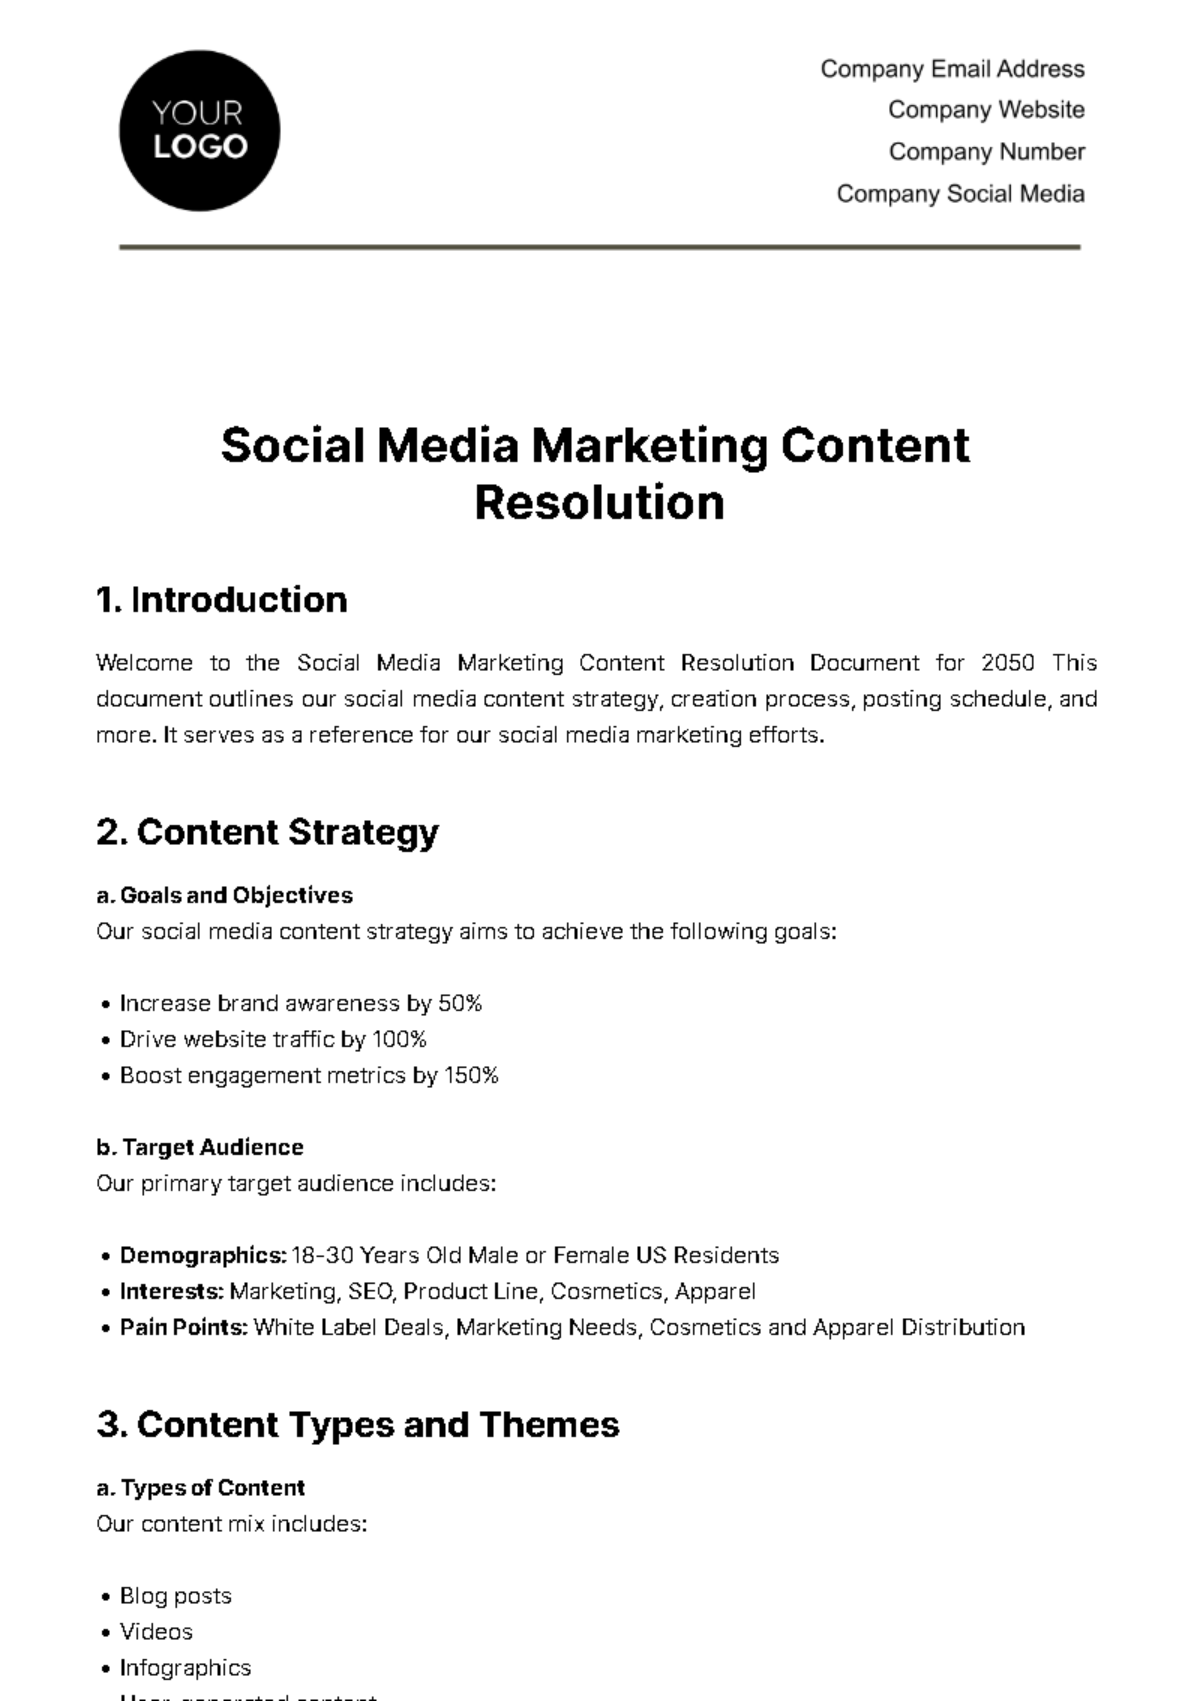 Free Social Media Marketing Content Resolution Template